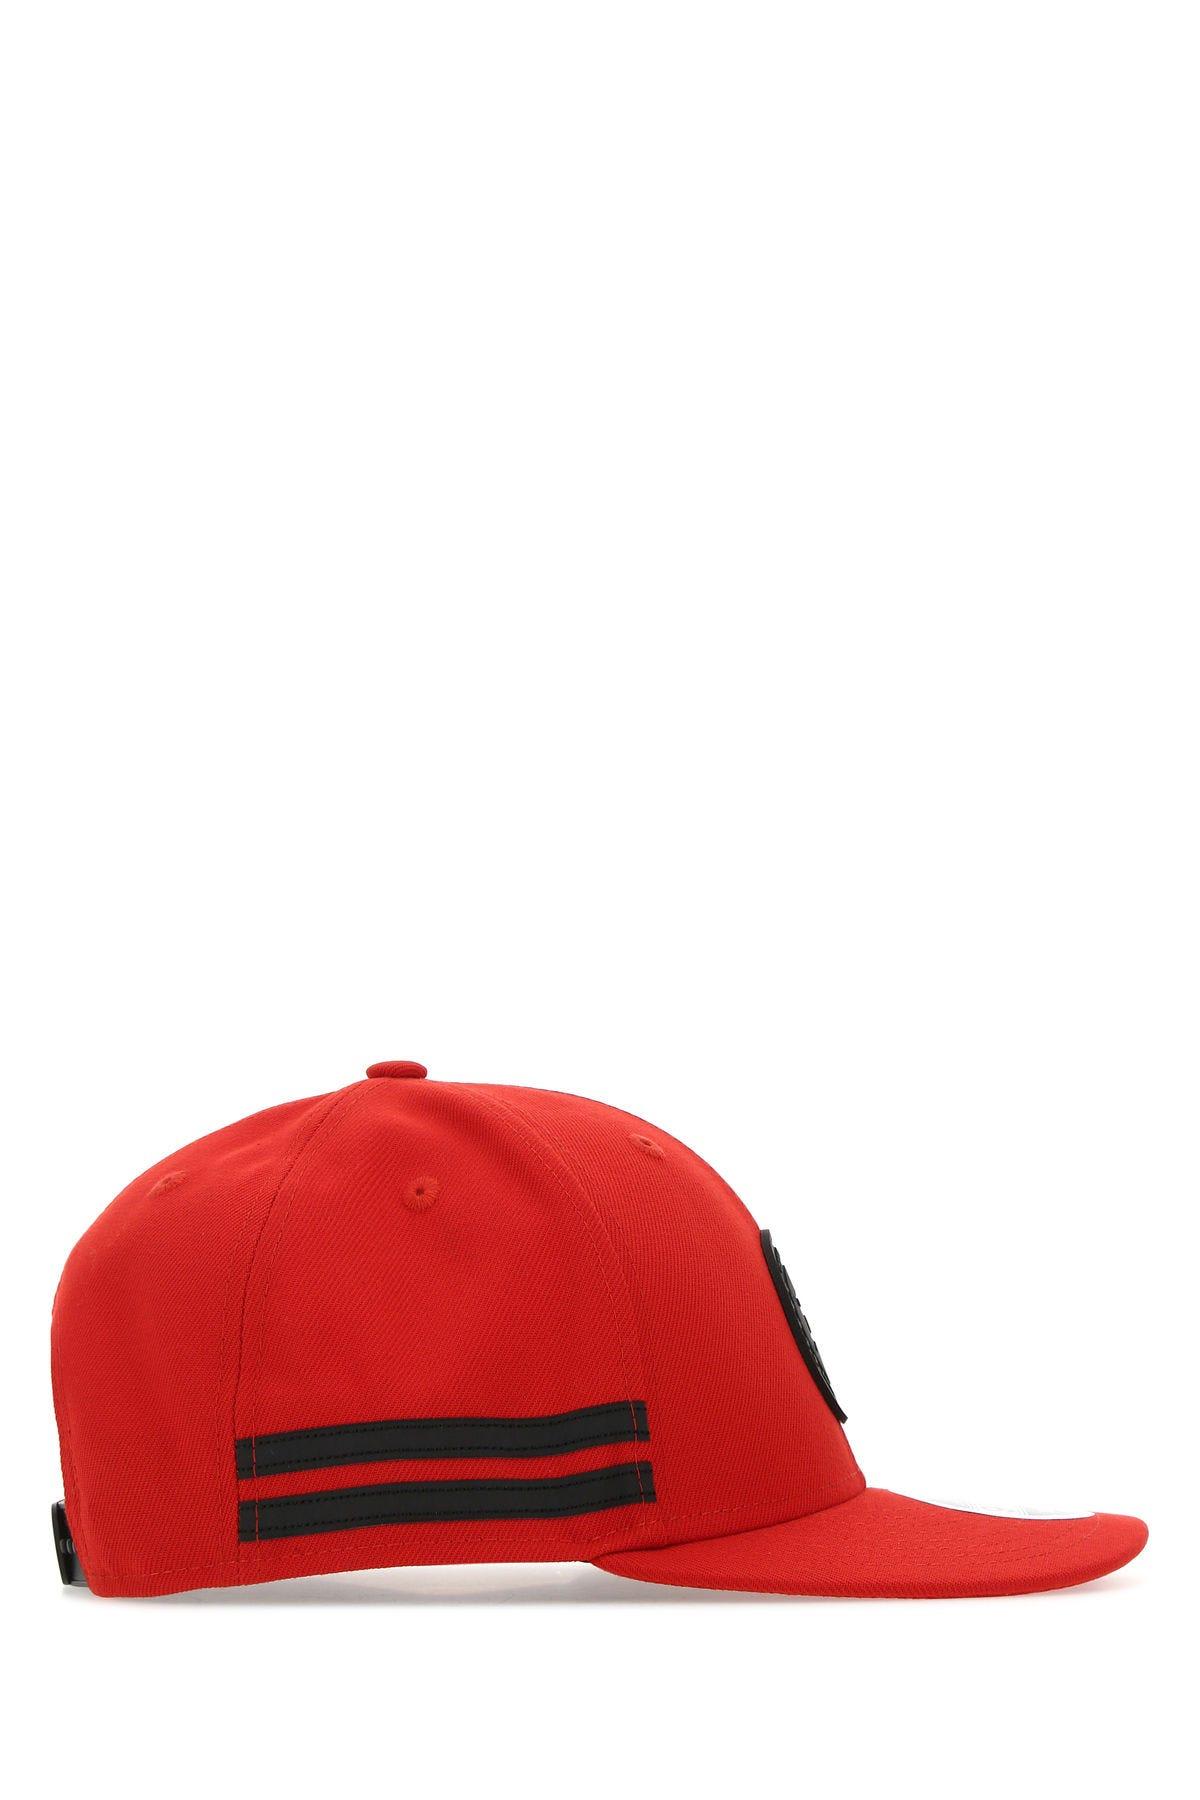 Shop Canada Goose Red Polyester Arctic Baseball Cap